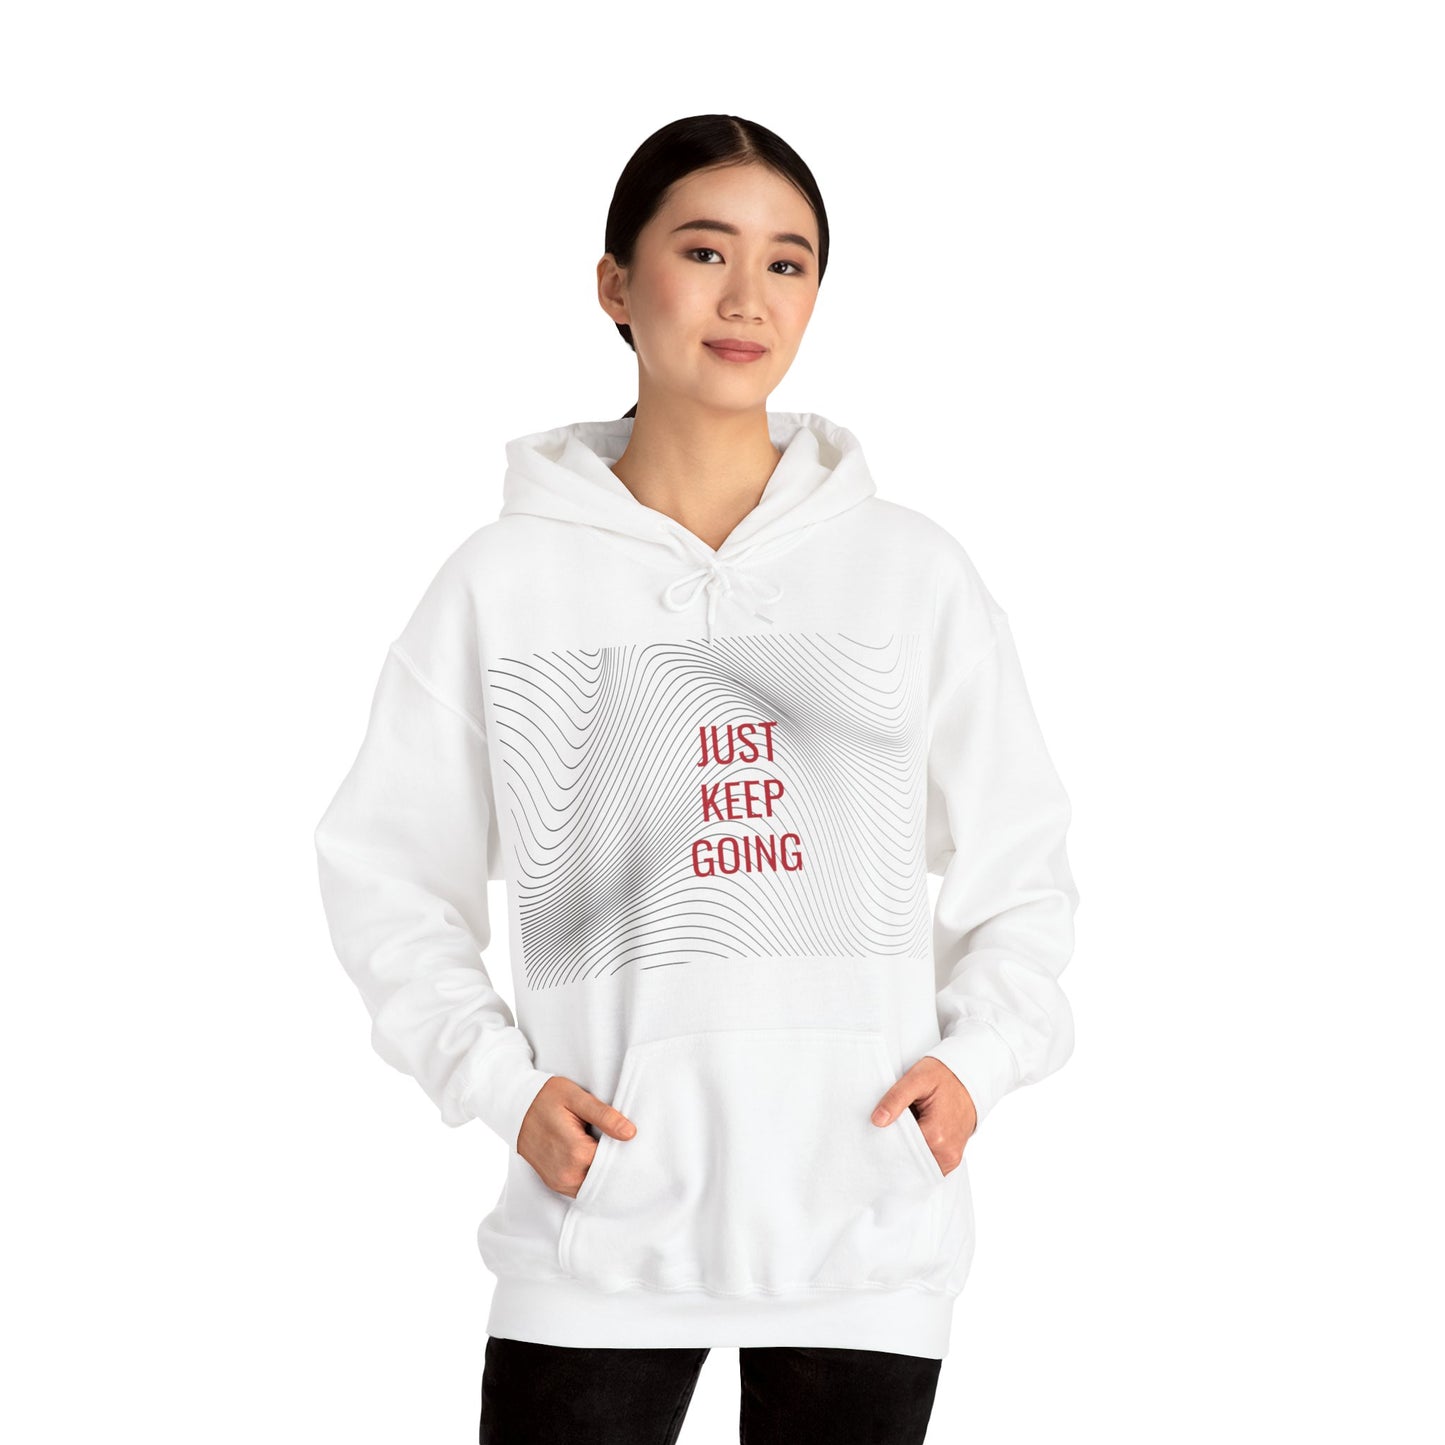 AMGA FIT Unisex Heavy Blend™ Hooded Sweatshirt